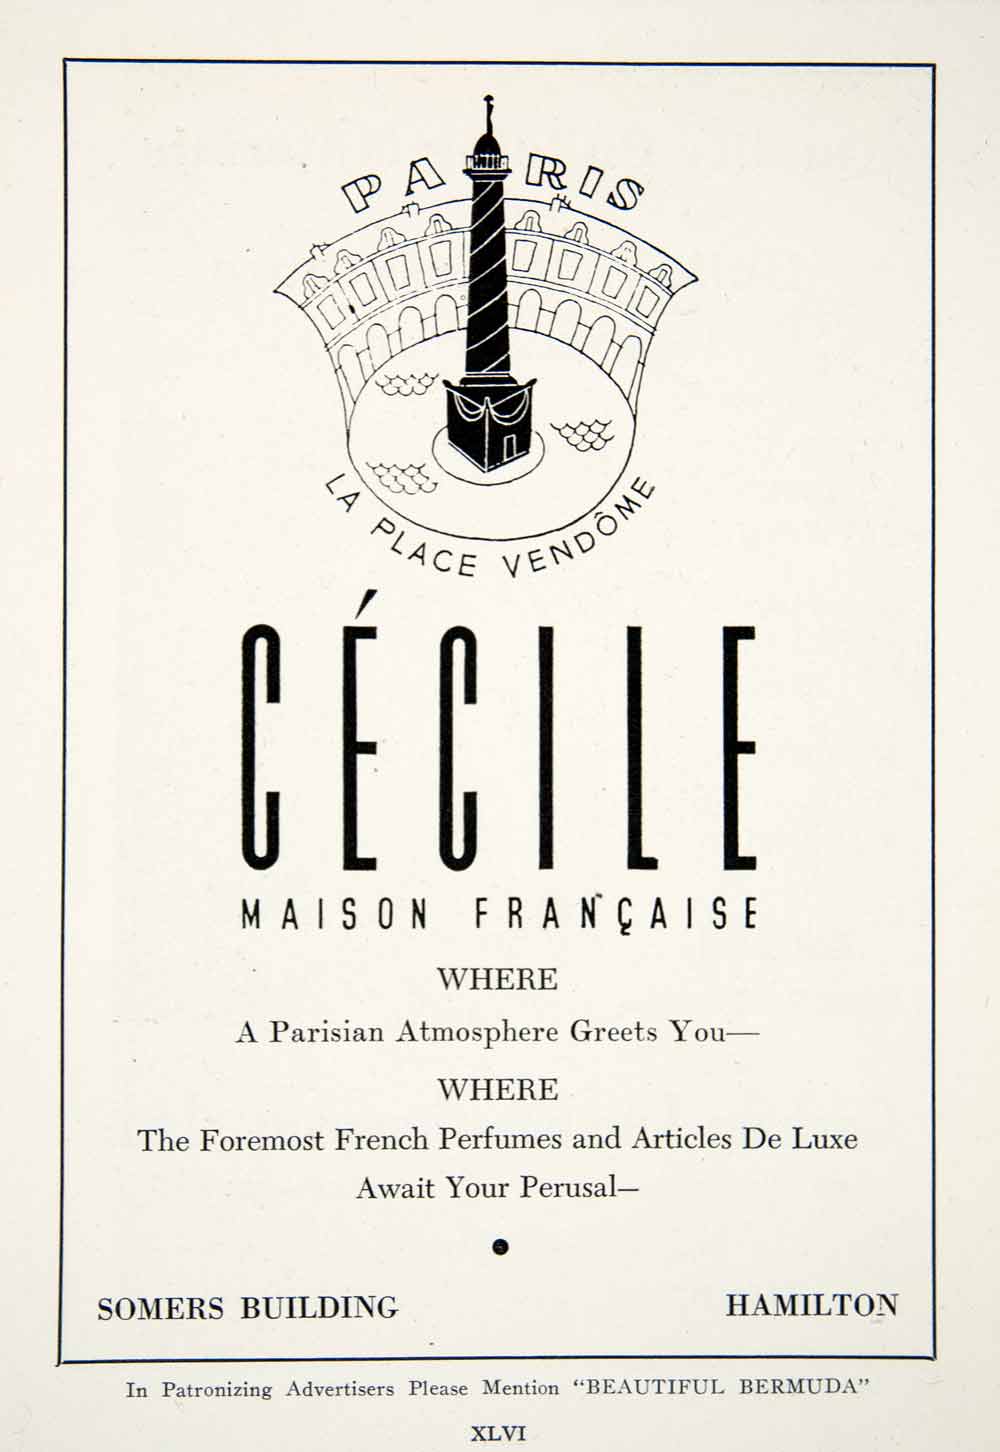 1947 Ad Cecile Maison Francaise Parisian French Perfume Hamilton Bermuda XGZA6